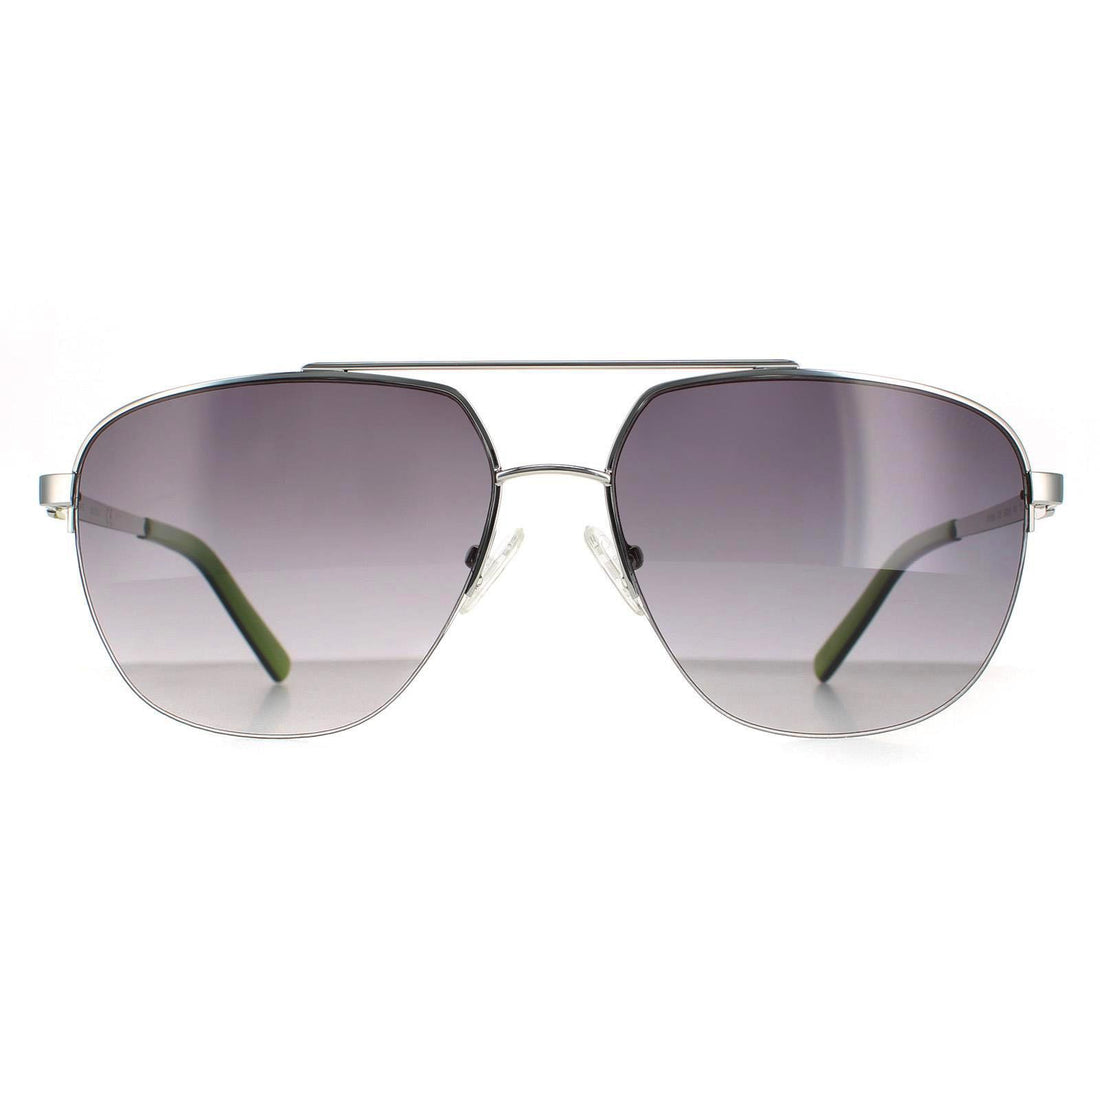 Guess GF5065 Sunglasses Shiny Light Nickeltin / Smoke Gradient